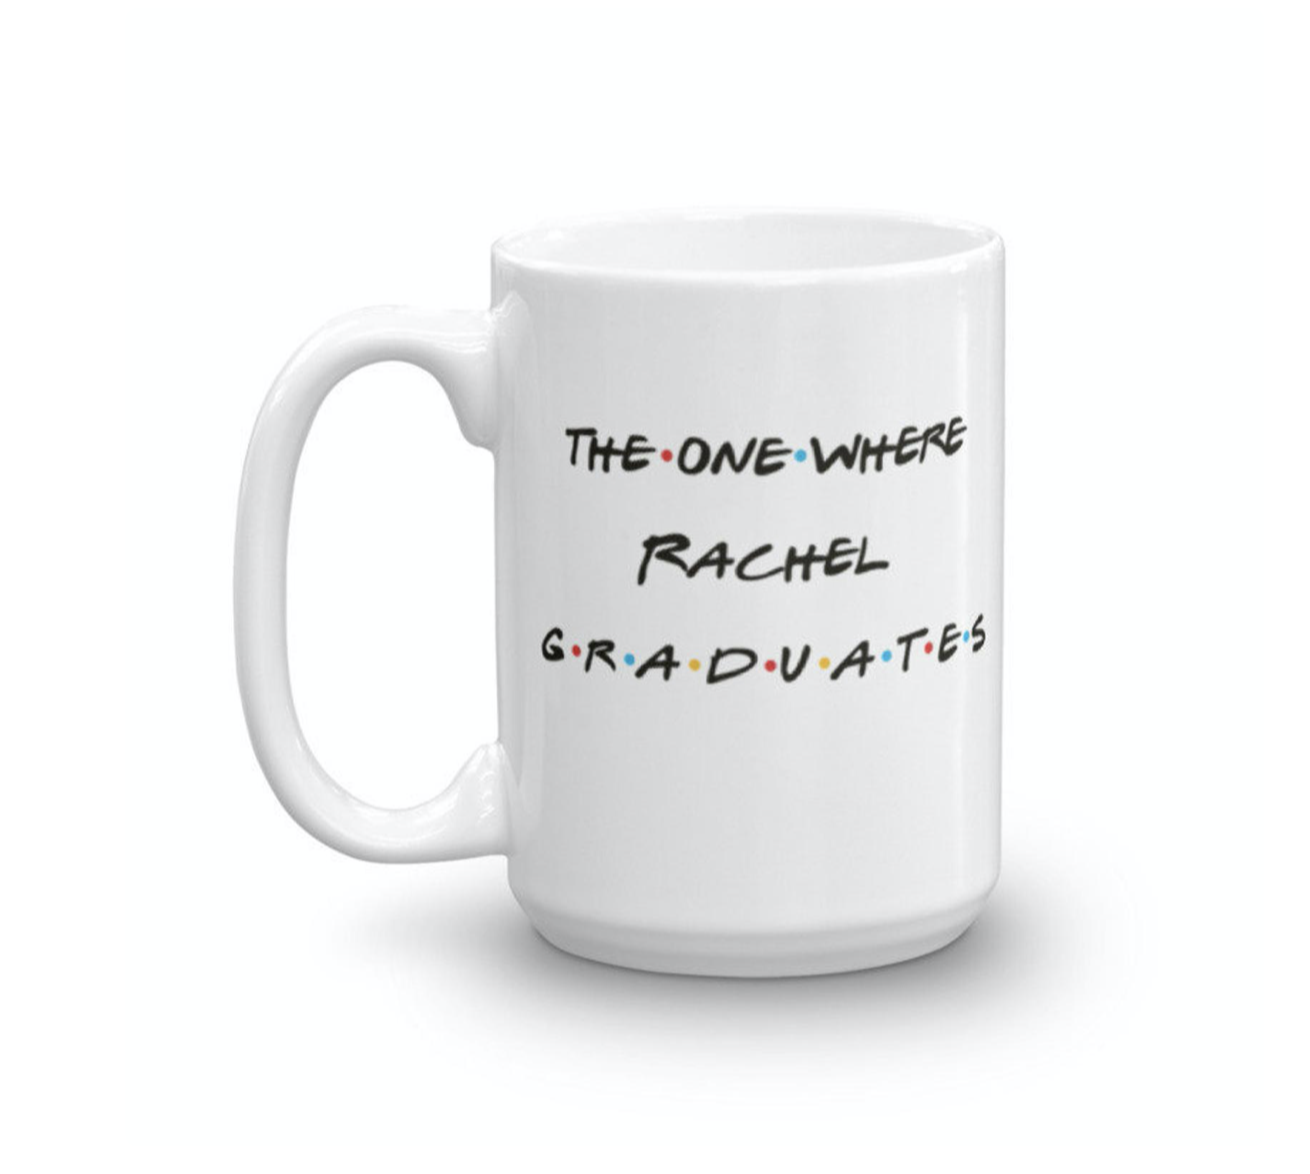 A coffee mug

Description automatically generated